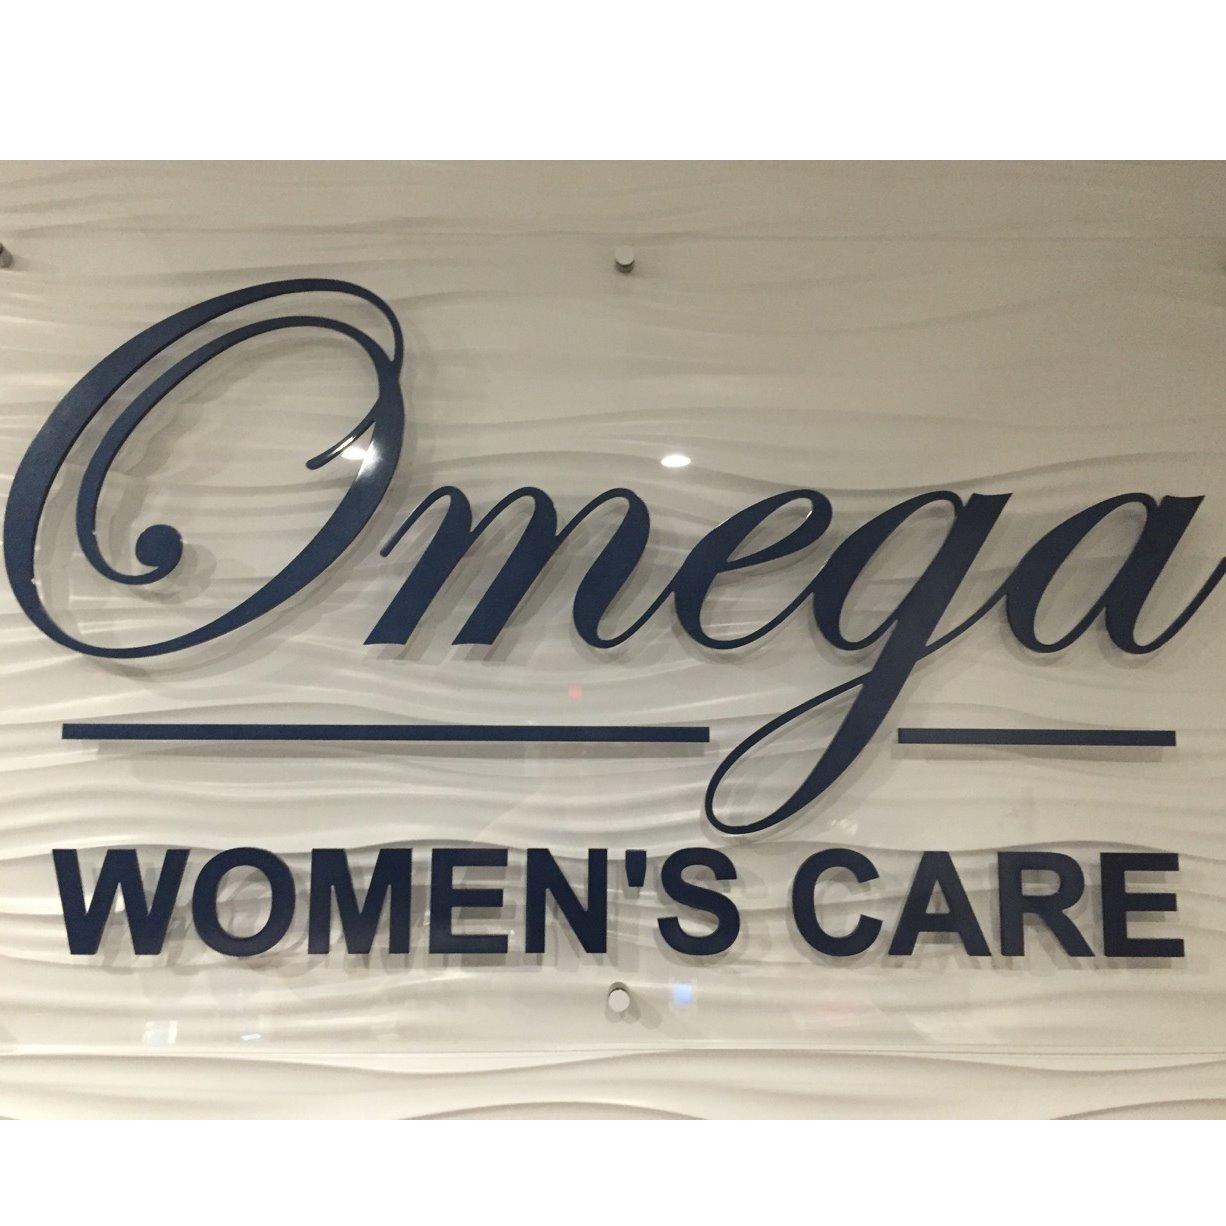 Omega Women's Care, LLC - Medical Doctor coral springs Florida